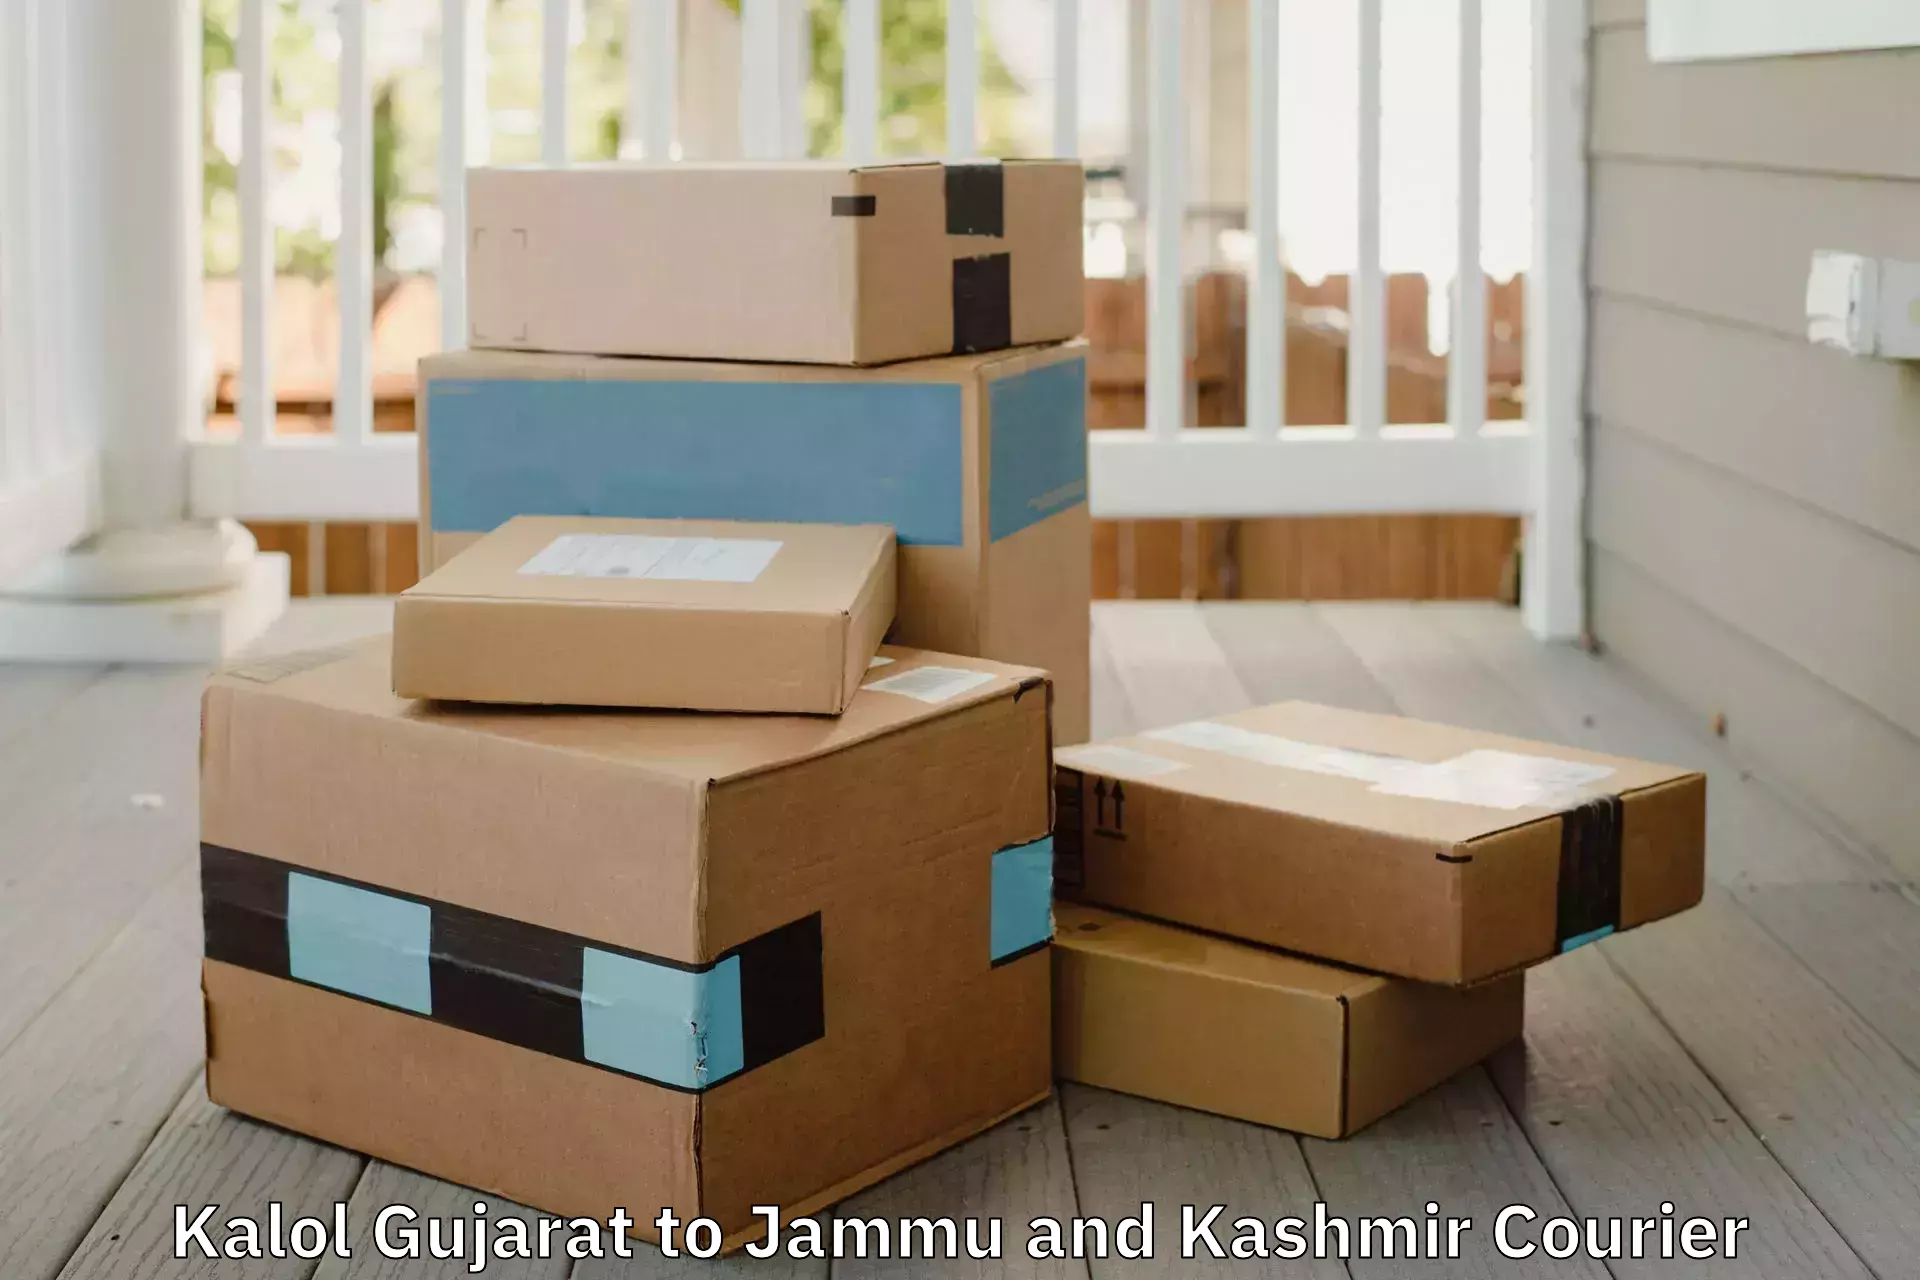 Moving and storage services Kalol Gujarat to Katra